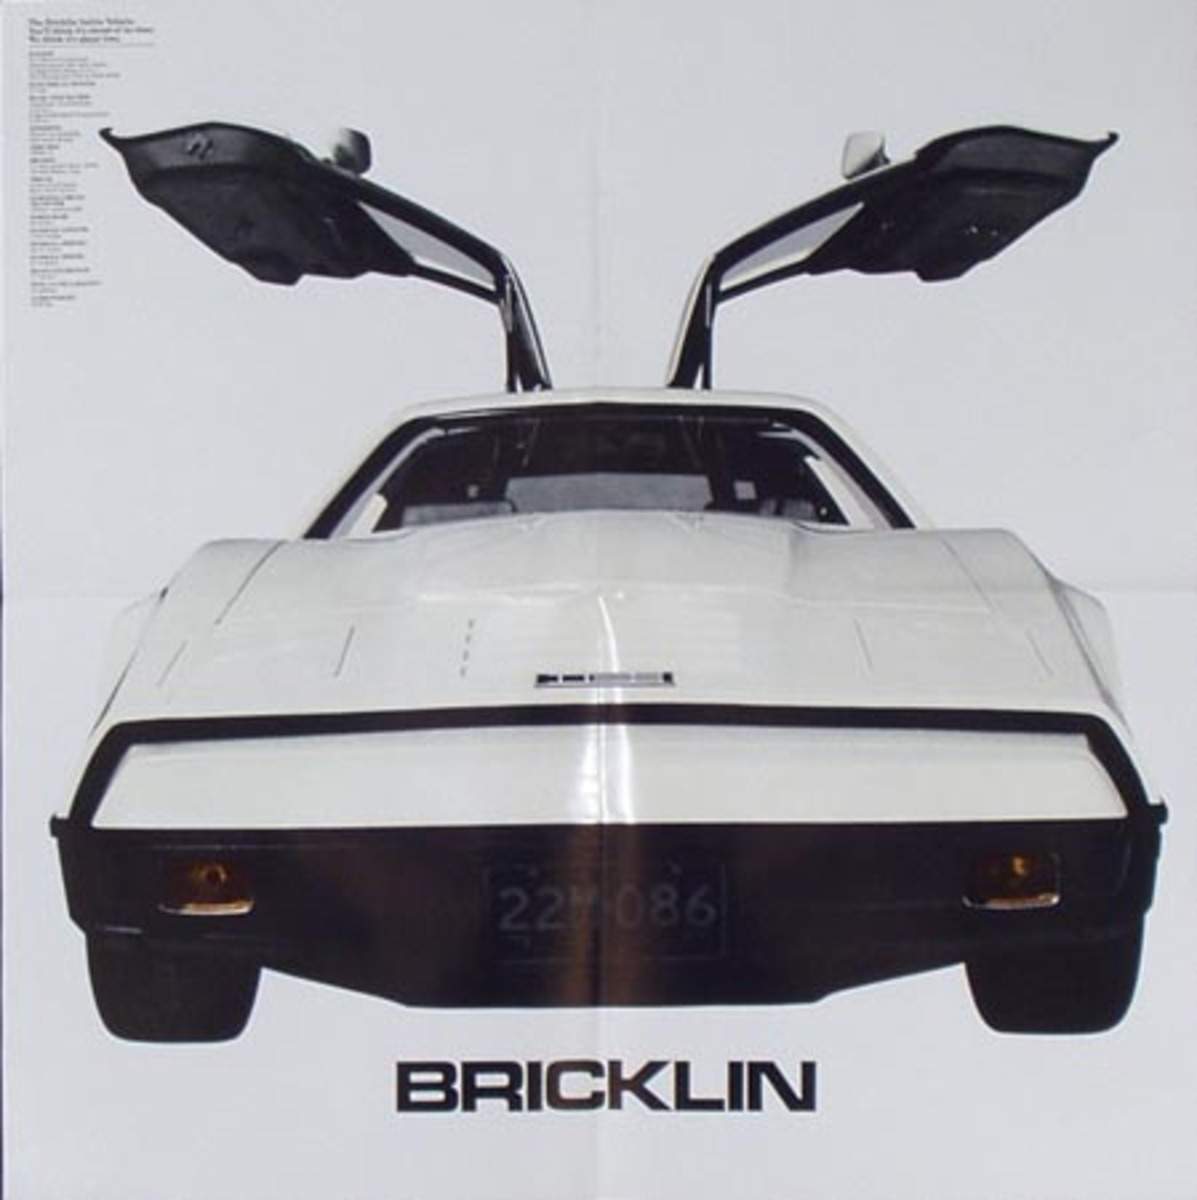 Bricklin Auto Original Advertising Poster